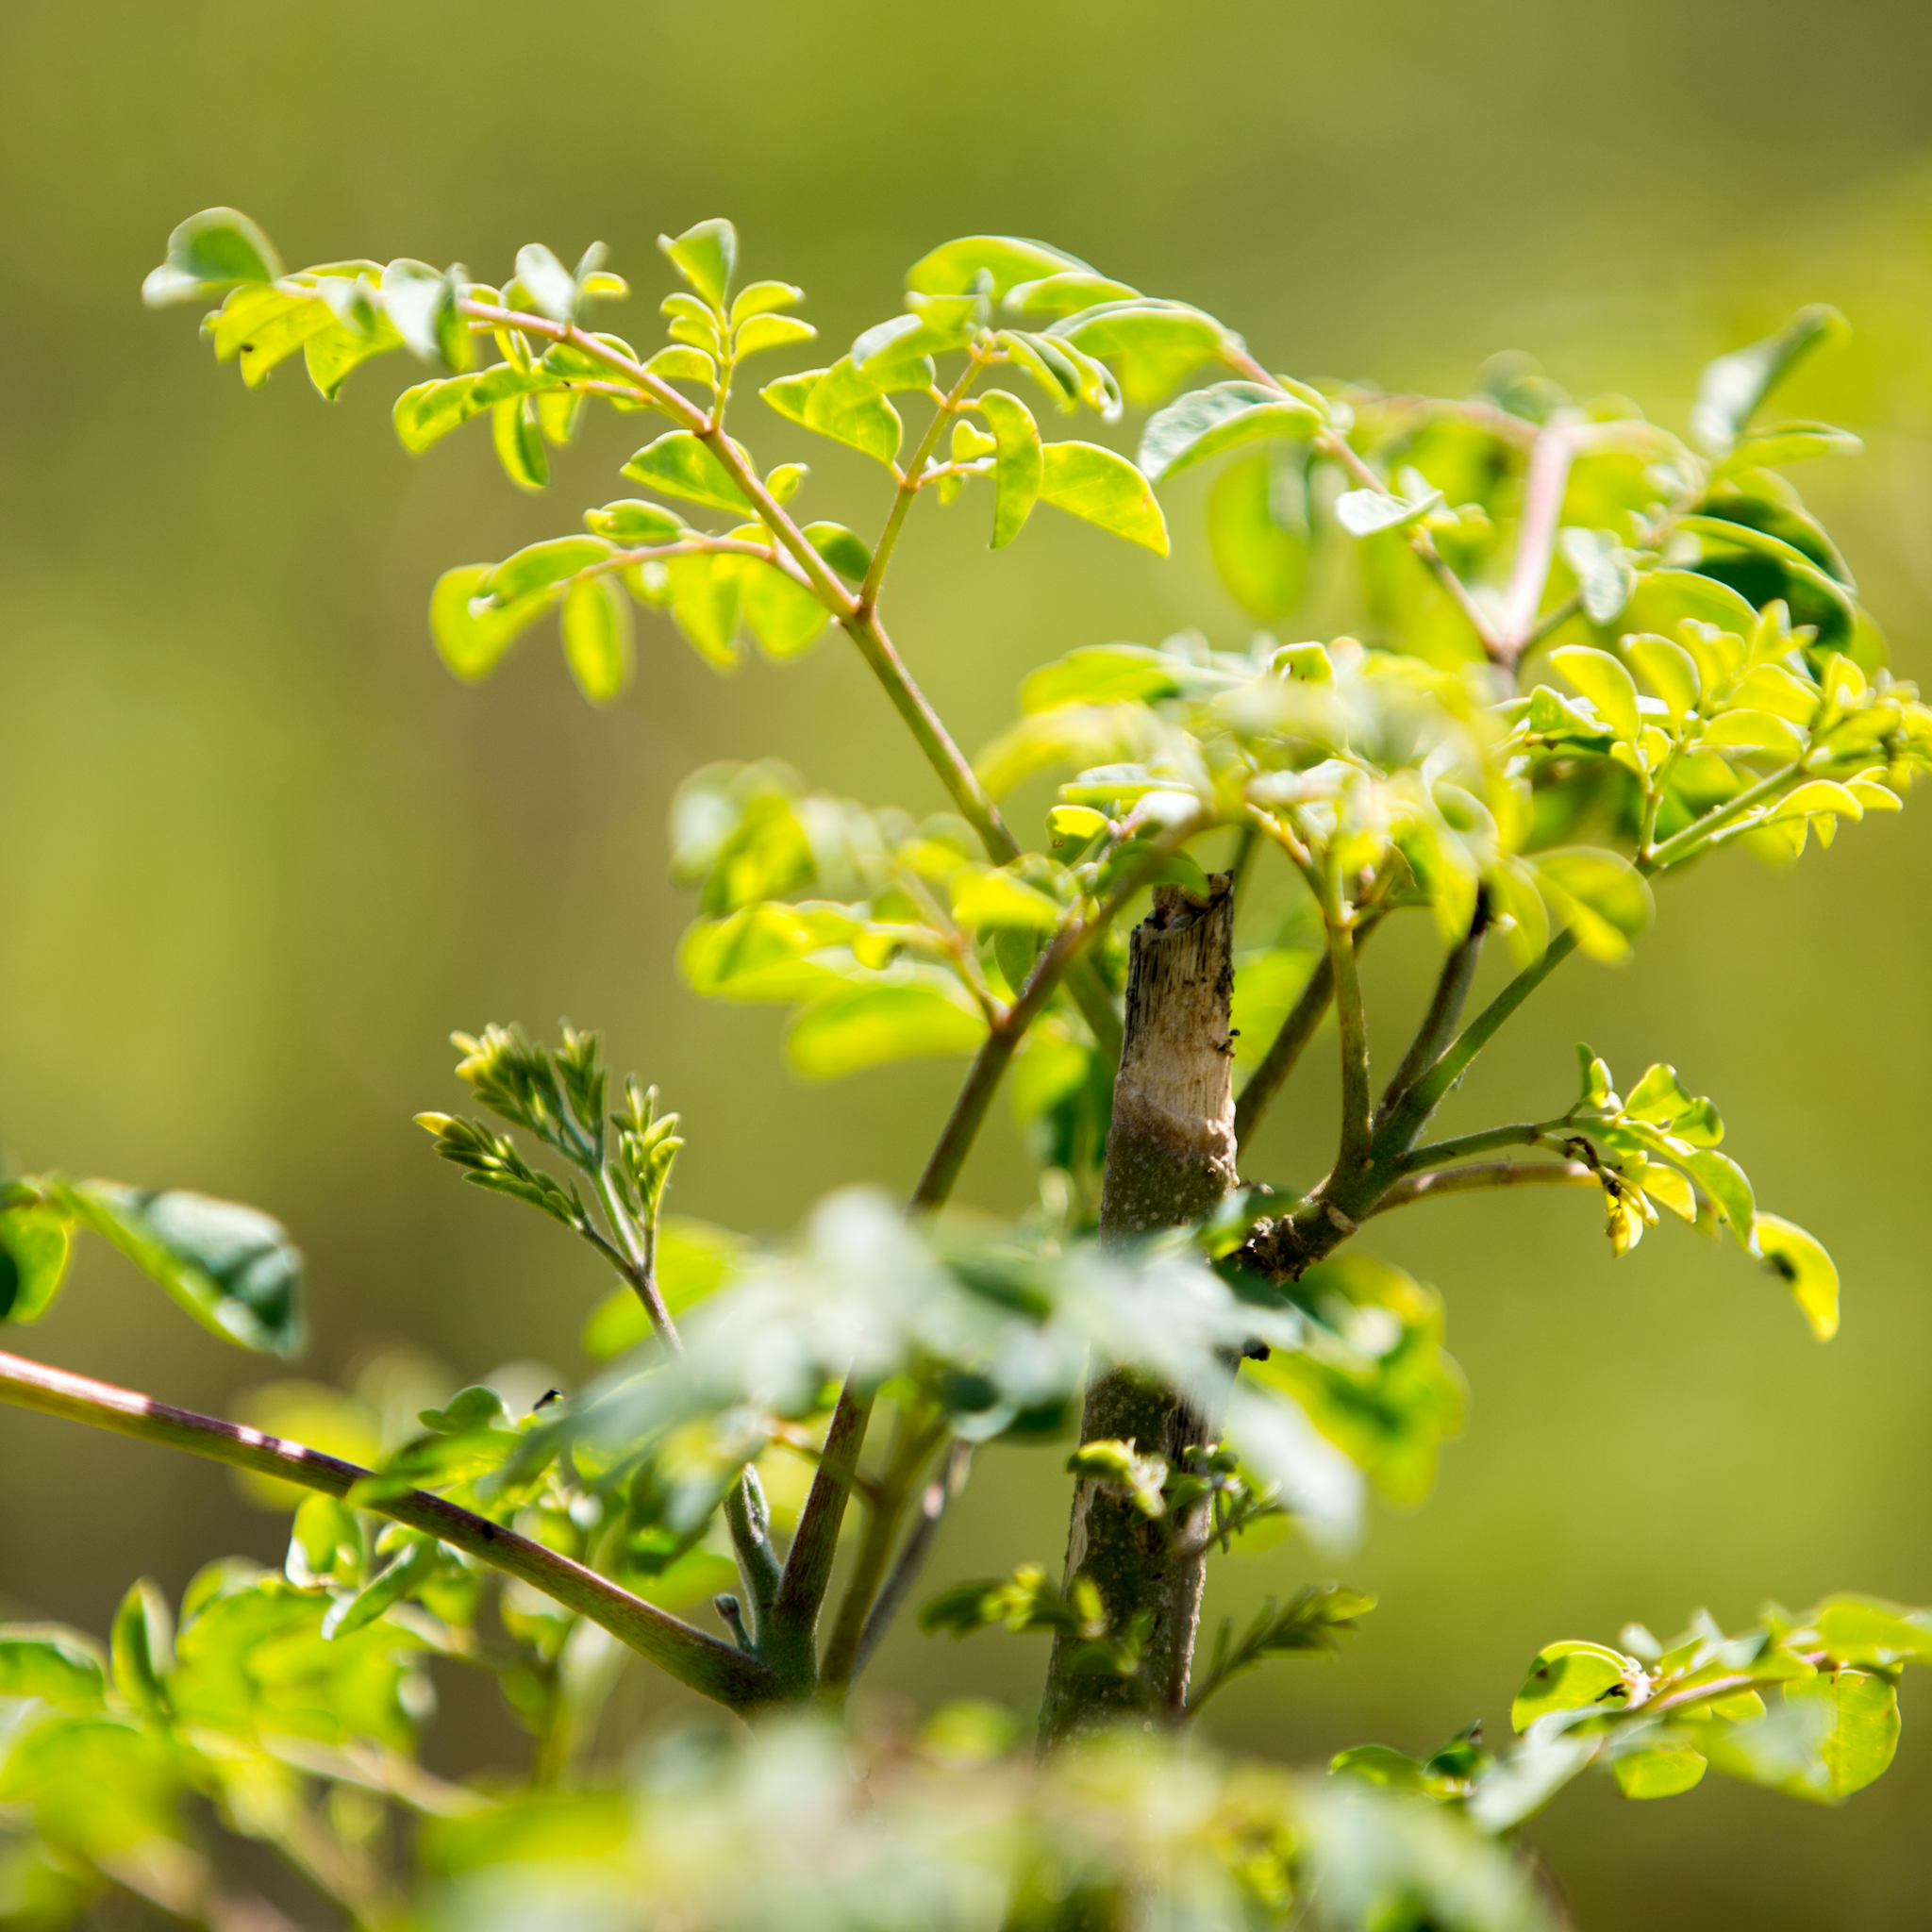 Get to Know the Moringa tree - History, Different uses, Nutrition.-All Moringa